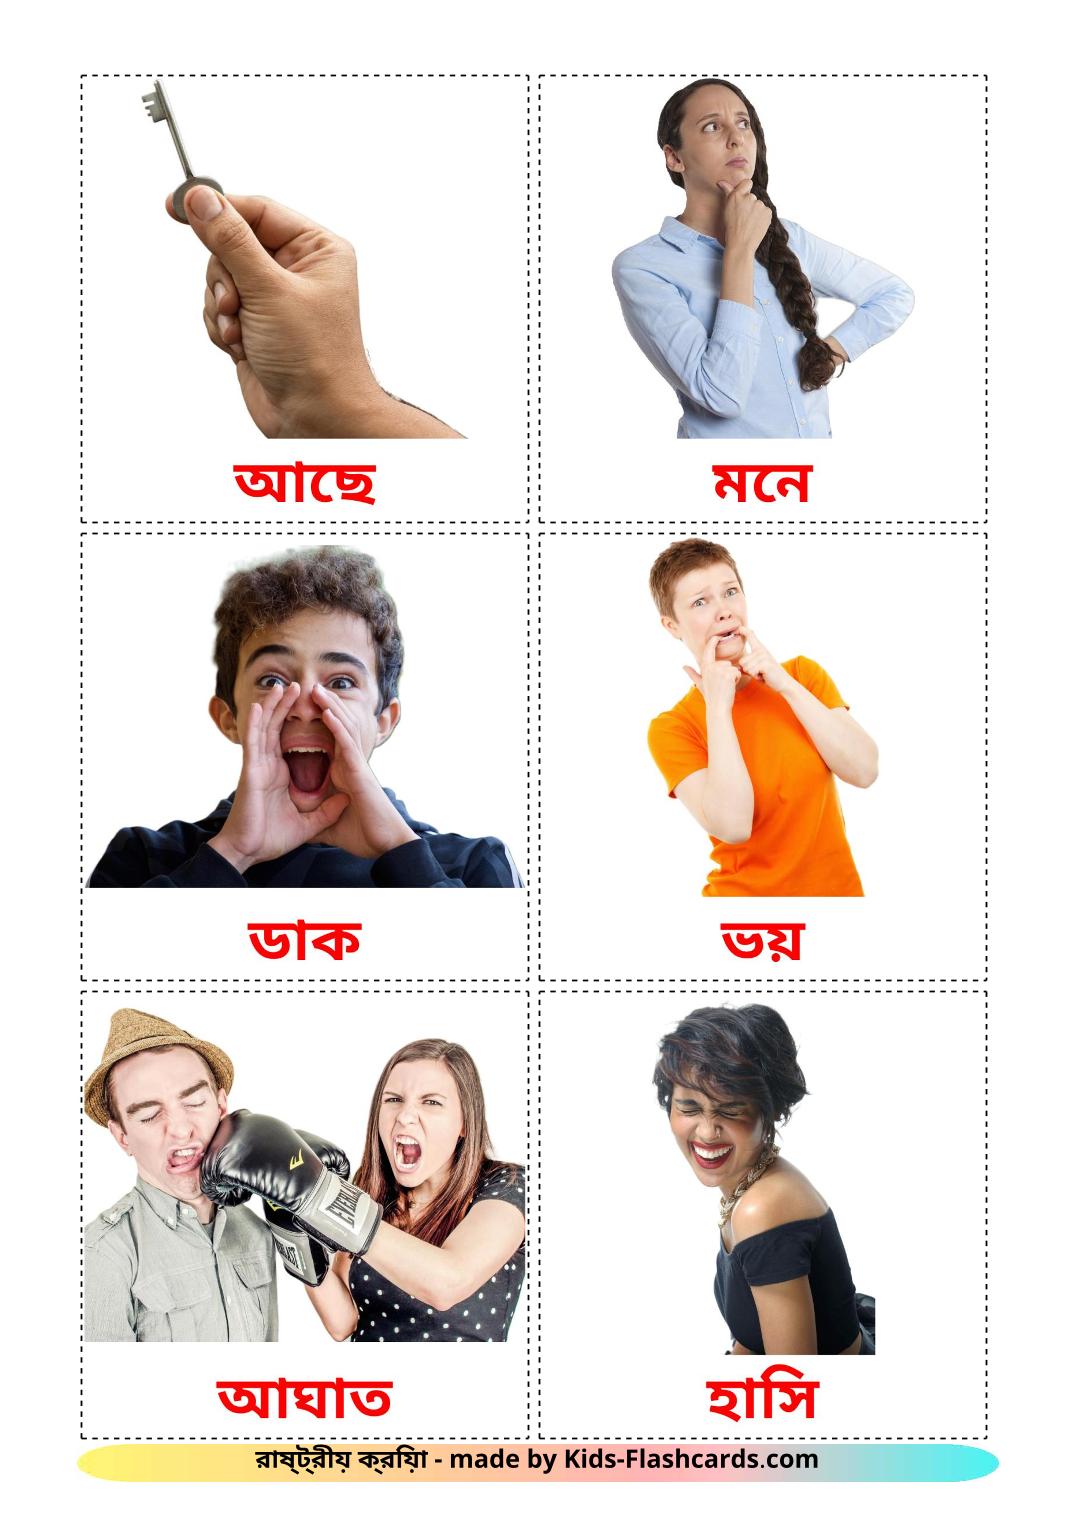 State verbs - 23 Free Printable bengali Flashcards 